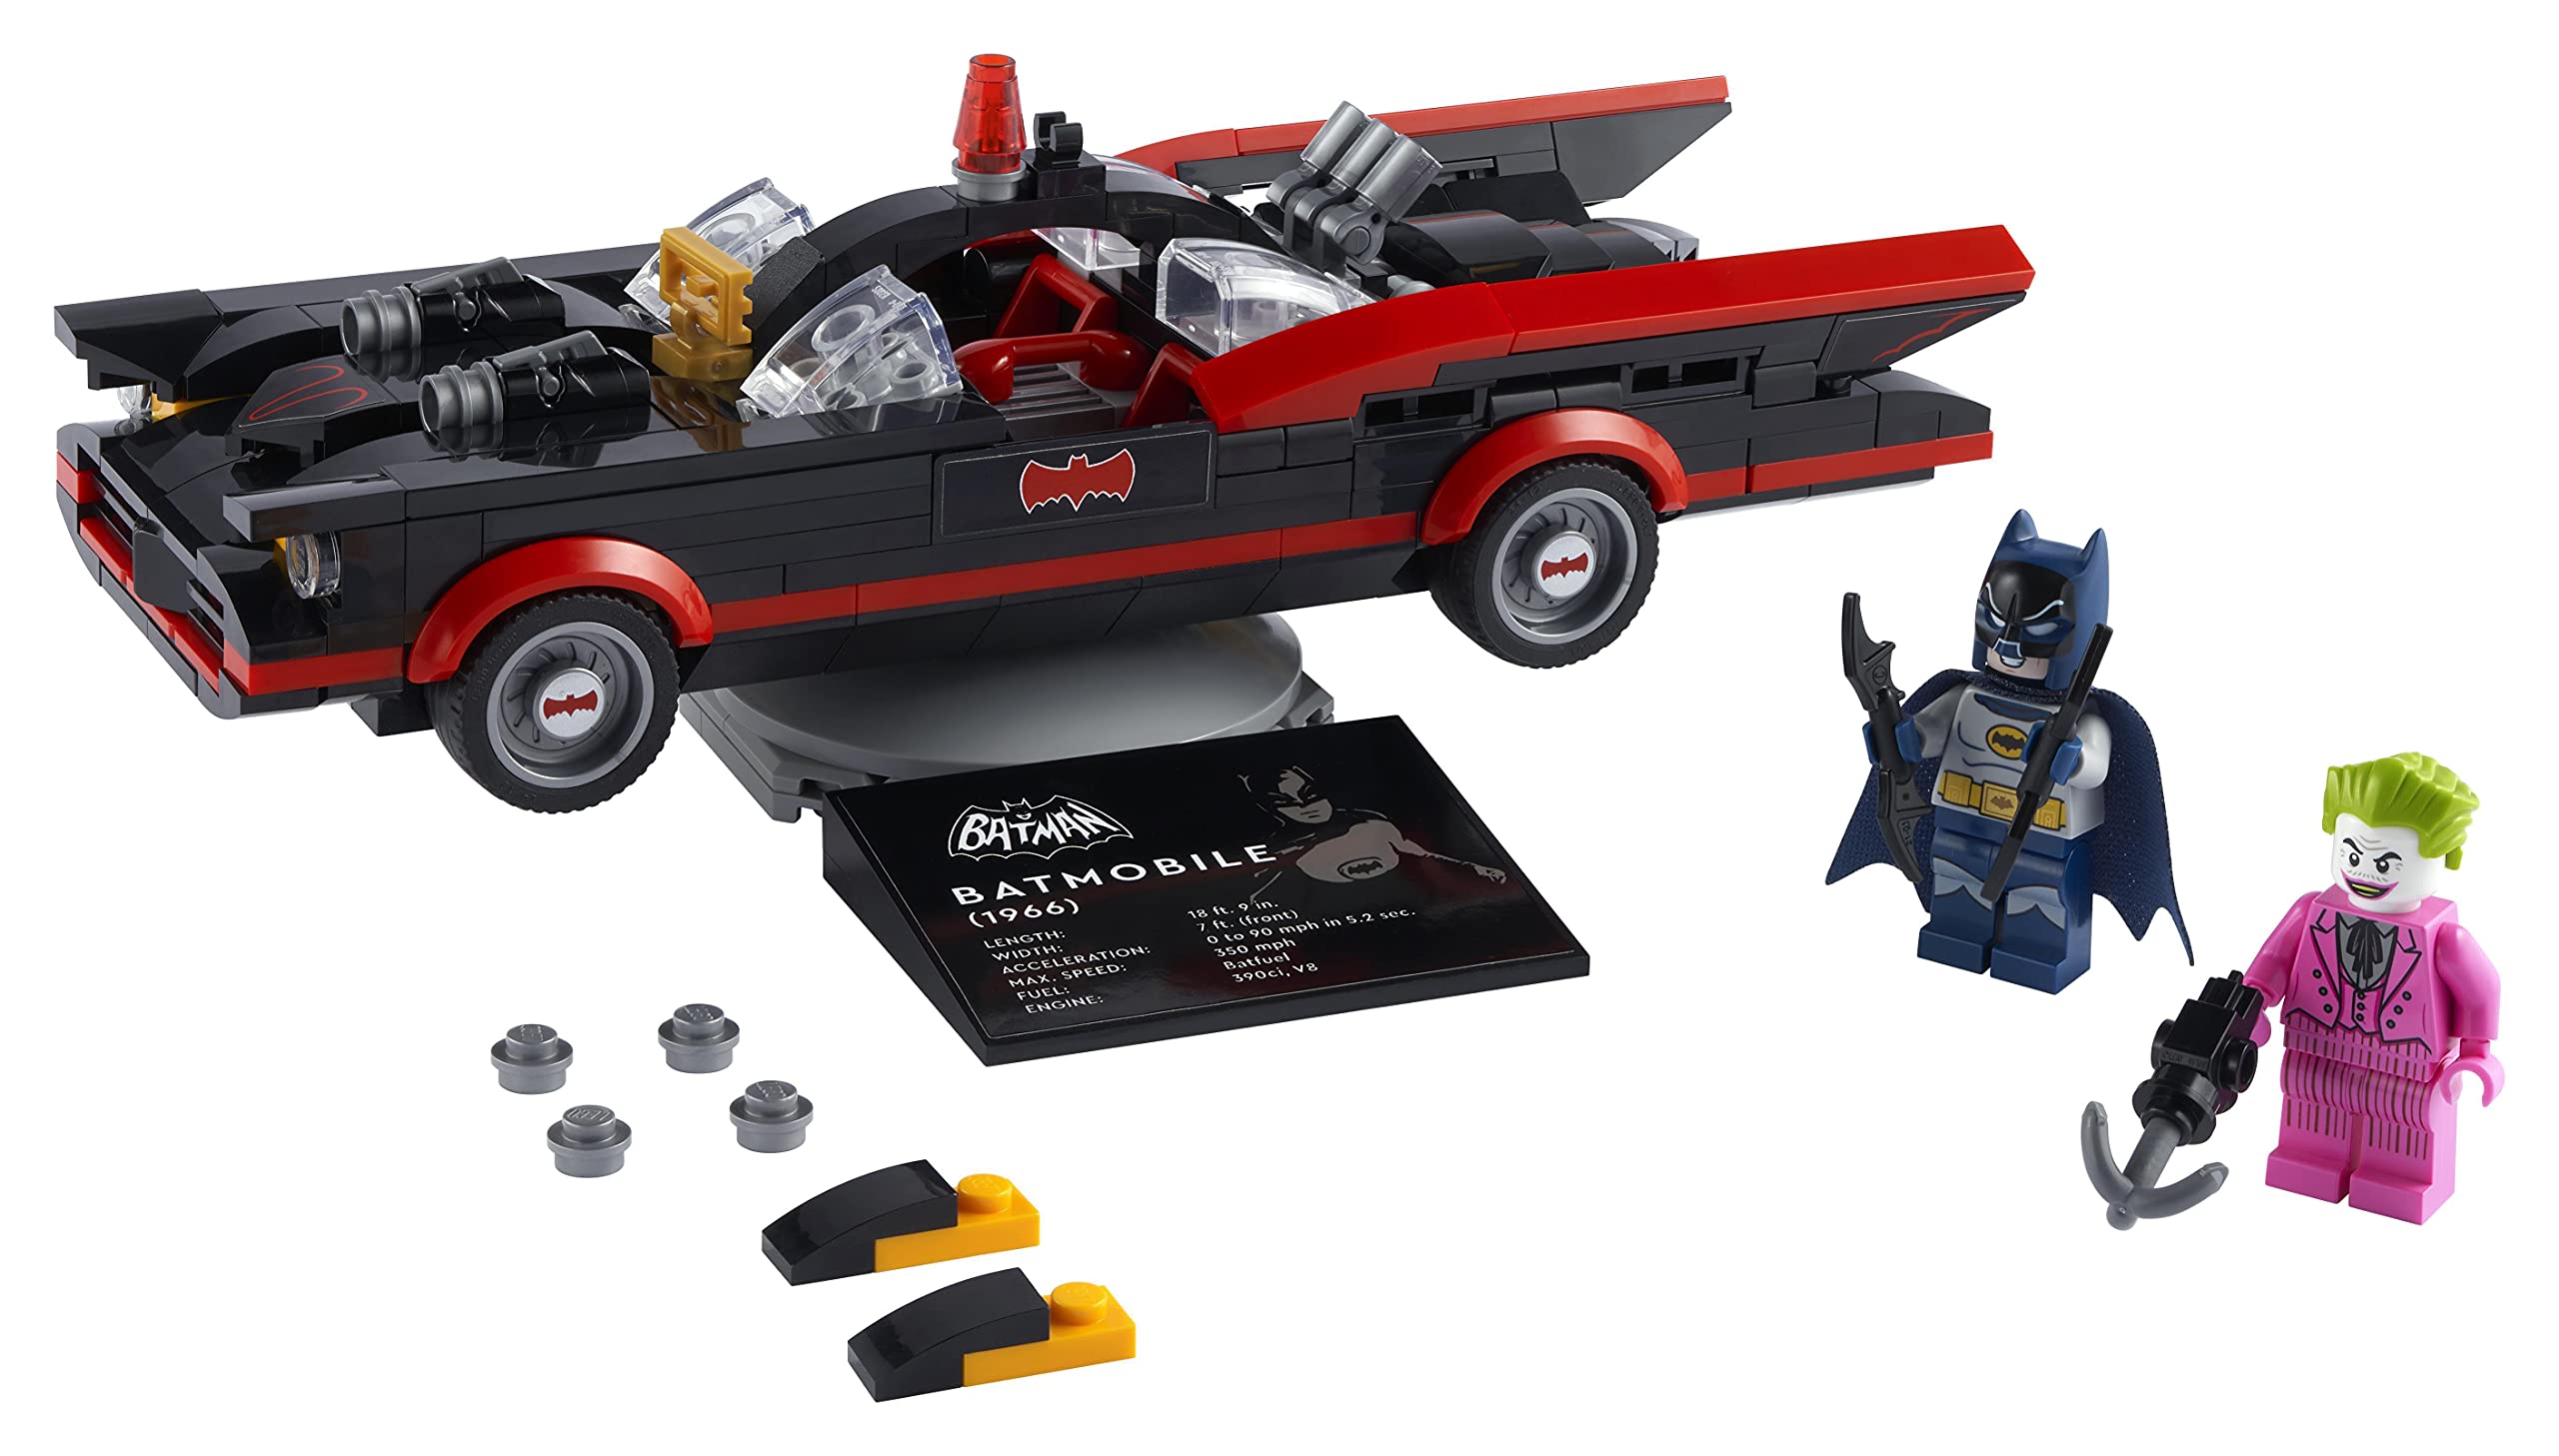 Lego DC Batman: Batman Classic TV Series Batmobile 76188 Building Toy (345 Pieces)